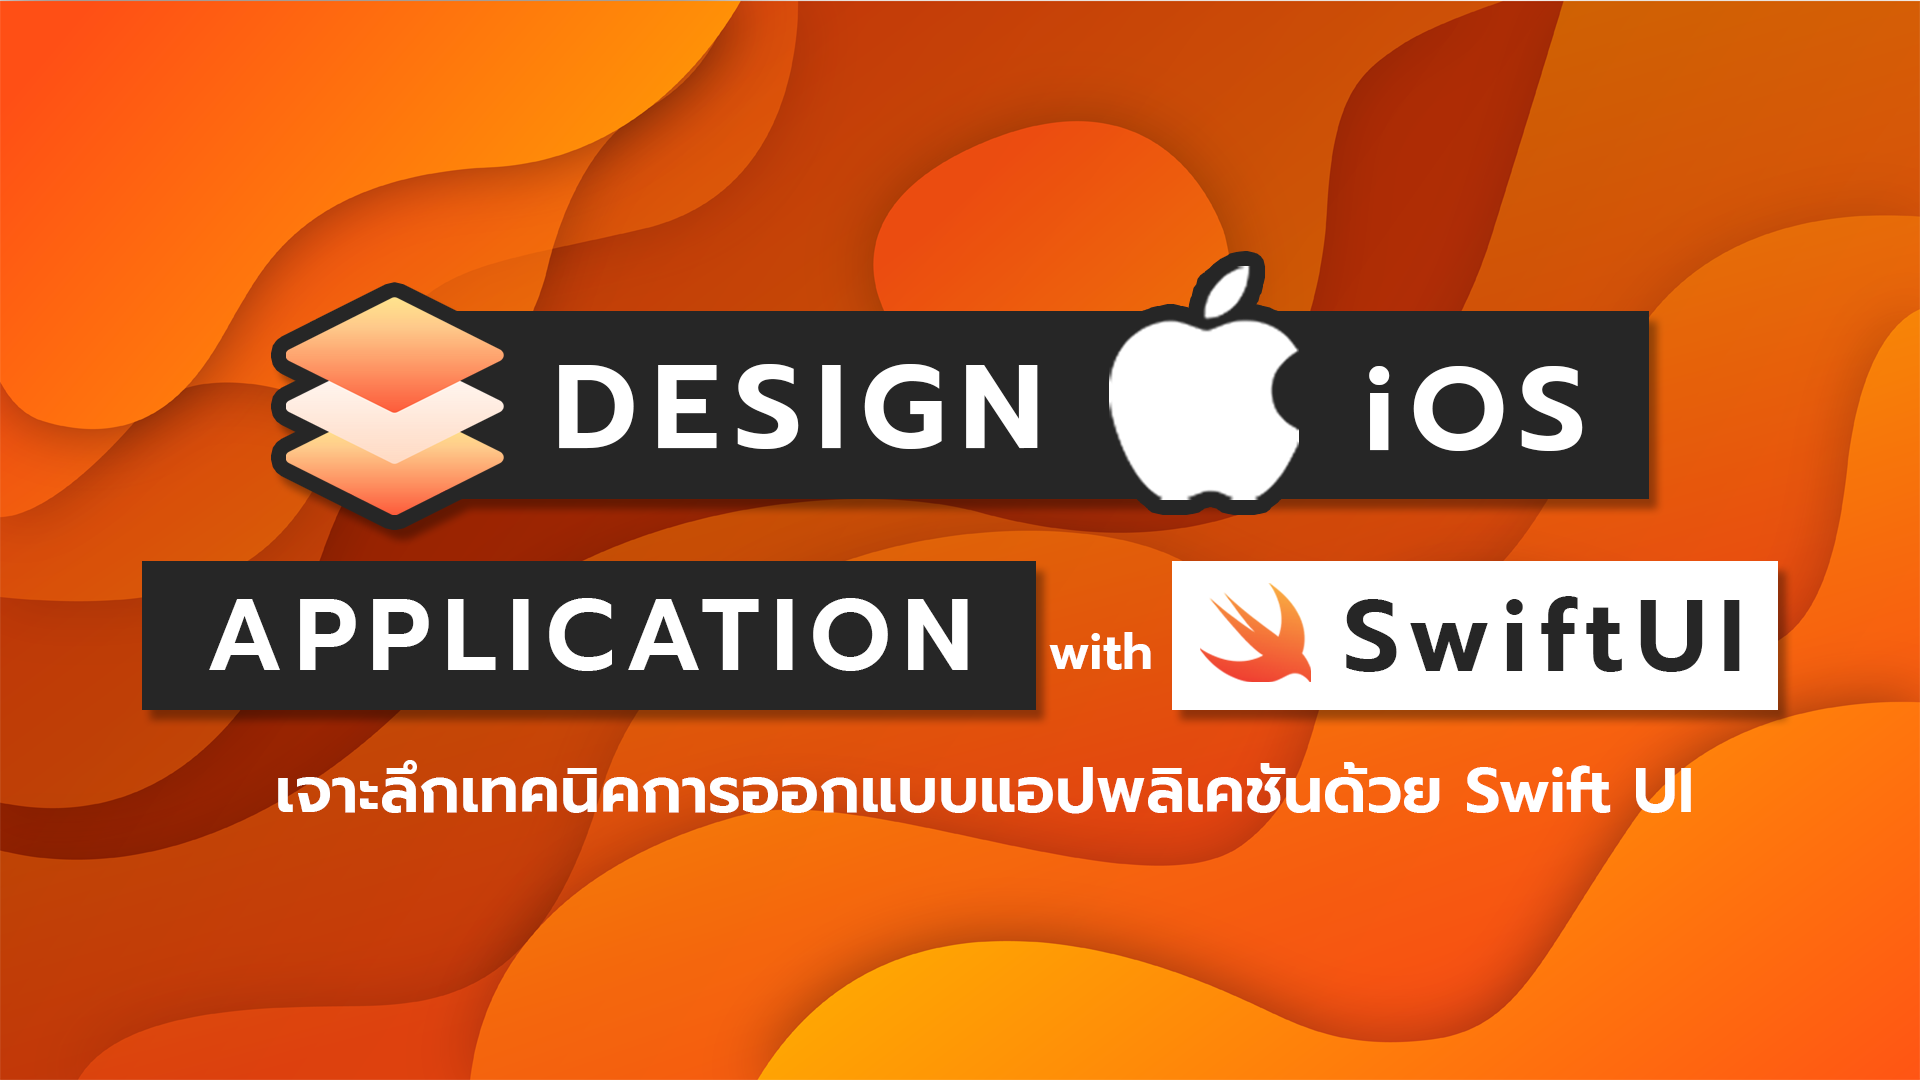 Design Ios Application With Swiftui – Borntodev เริ่มต้นเรียน เขียนโปรแกรม  ขั้นเทพ !